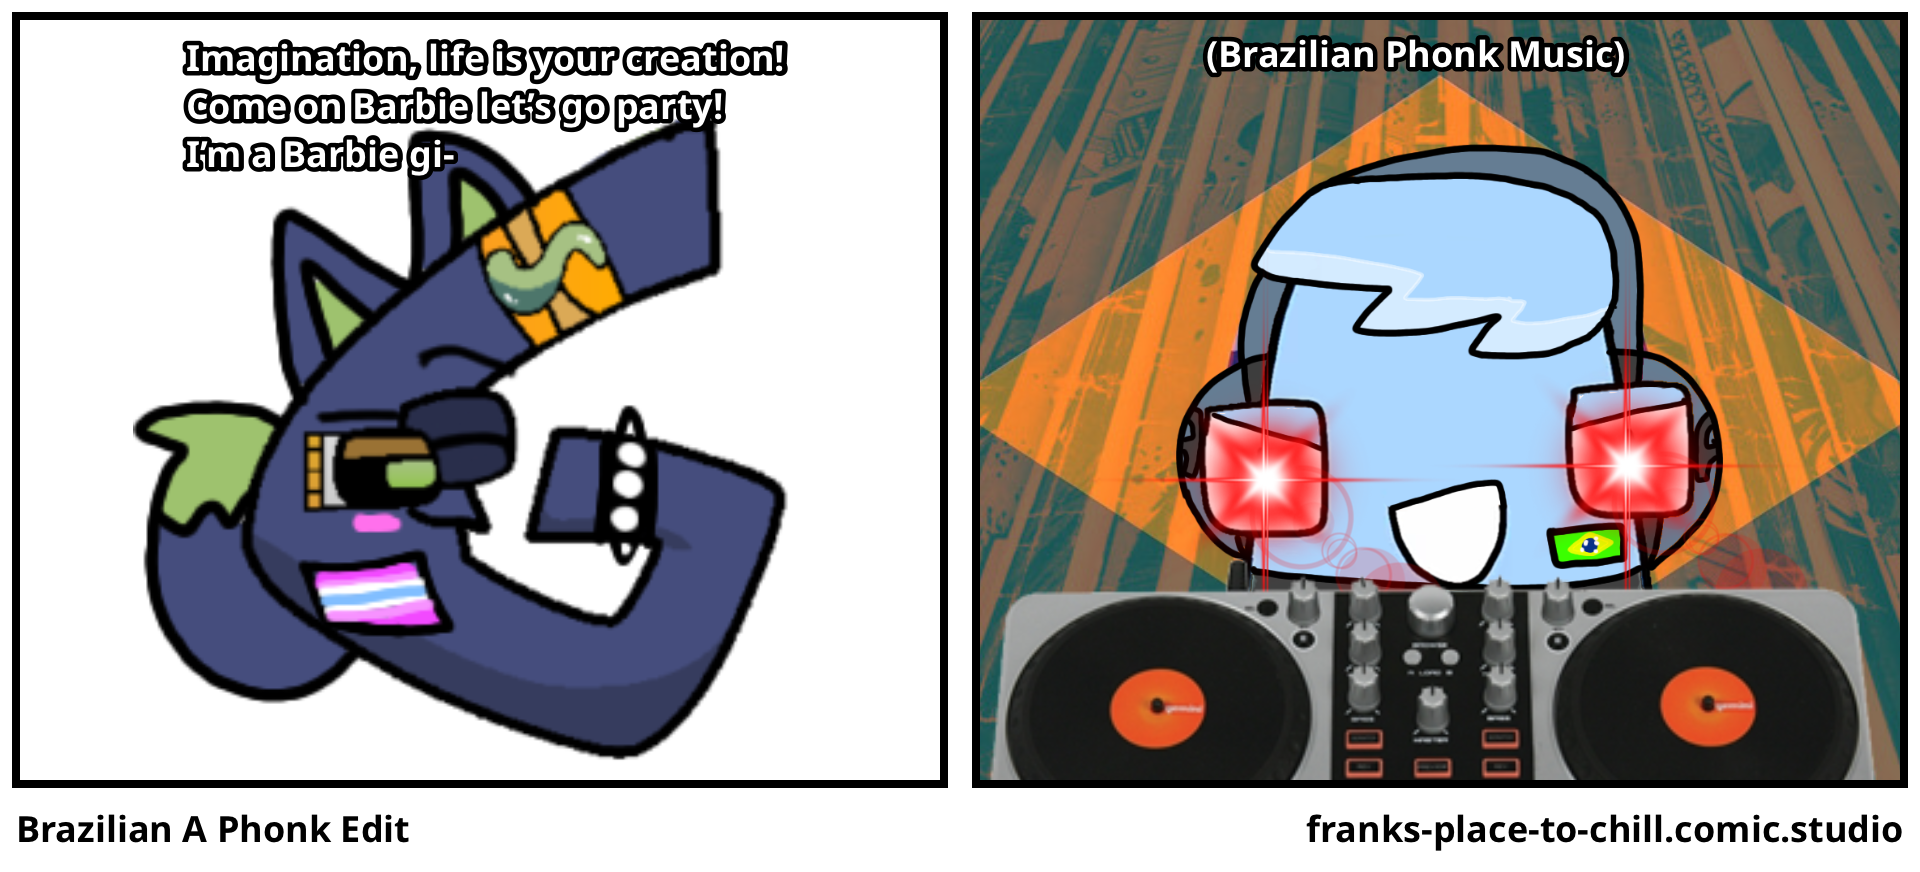 Brazilian A Phonk Edit